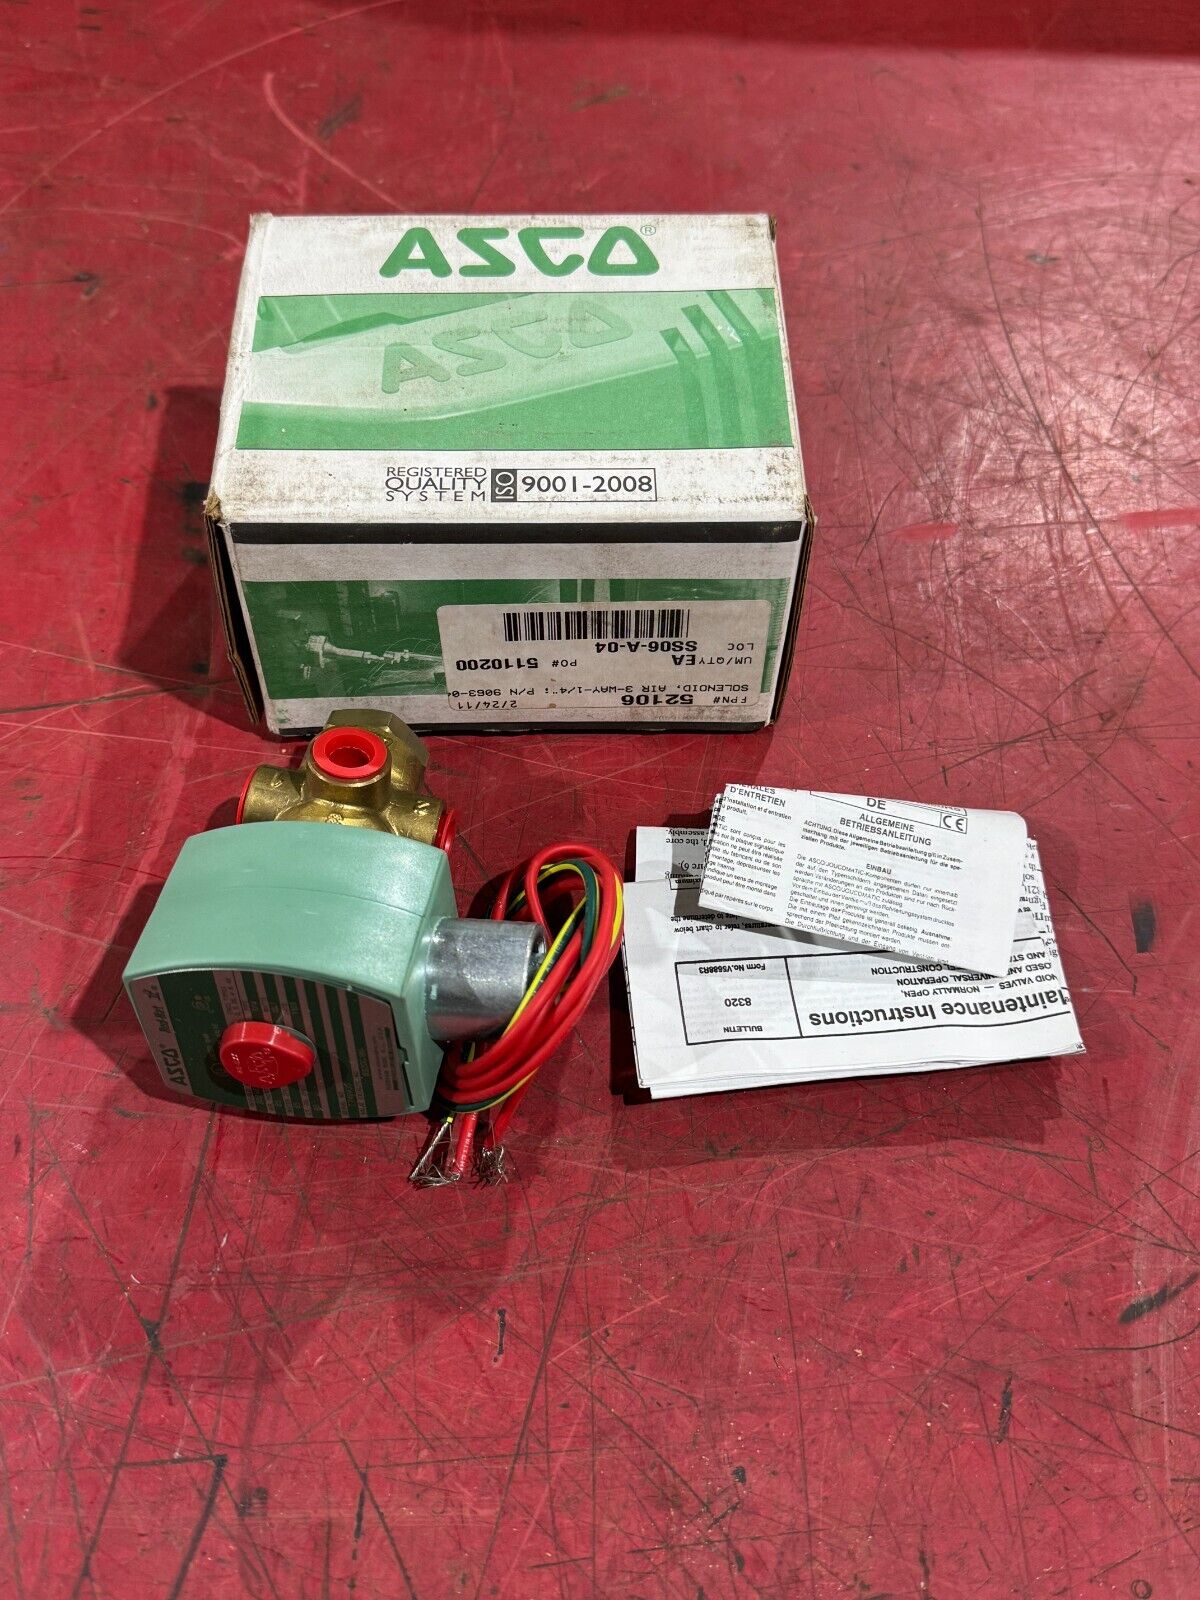 NEW IN BOX ASCO RED HAT SOLENOID VALVE 110/120V. COIL 1/4" PIPE 8320G186